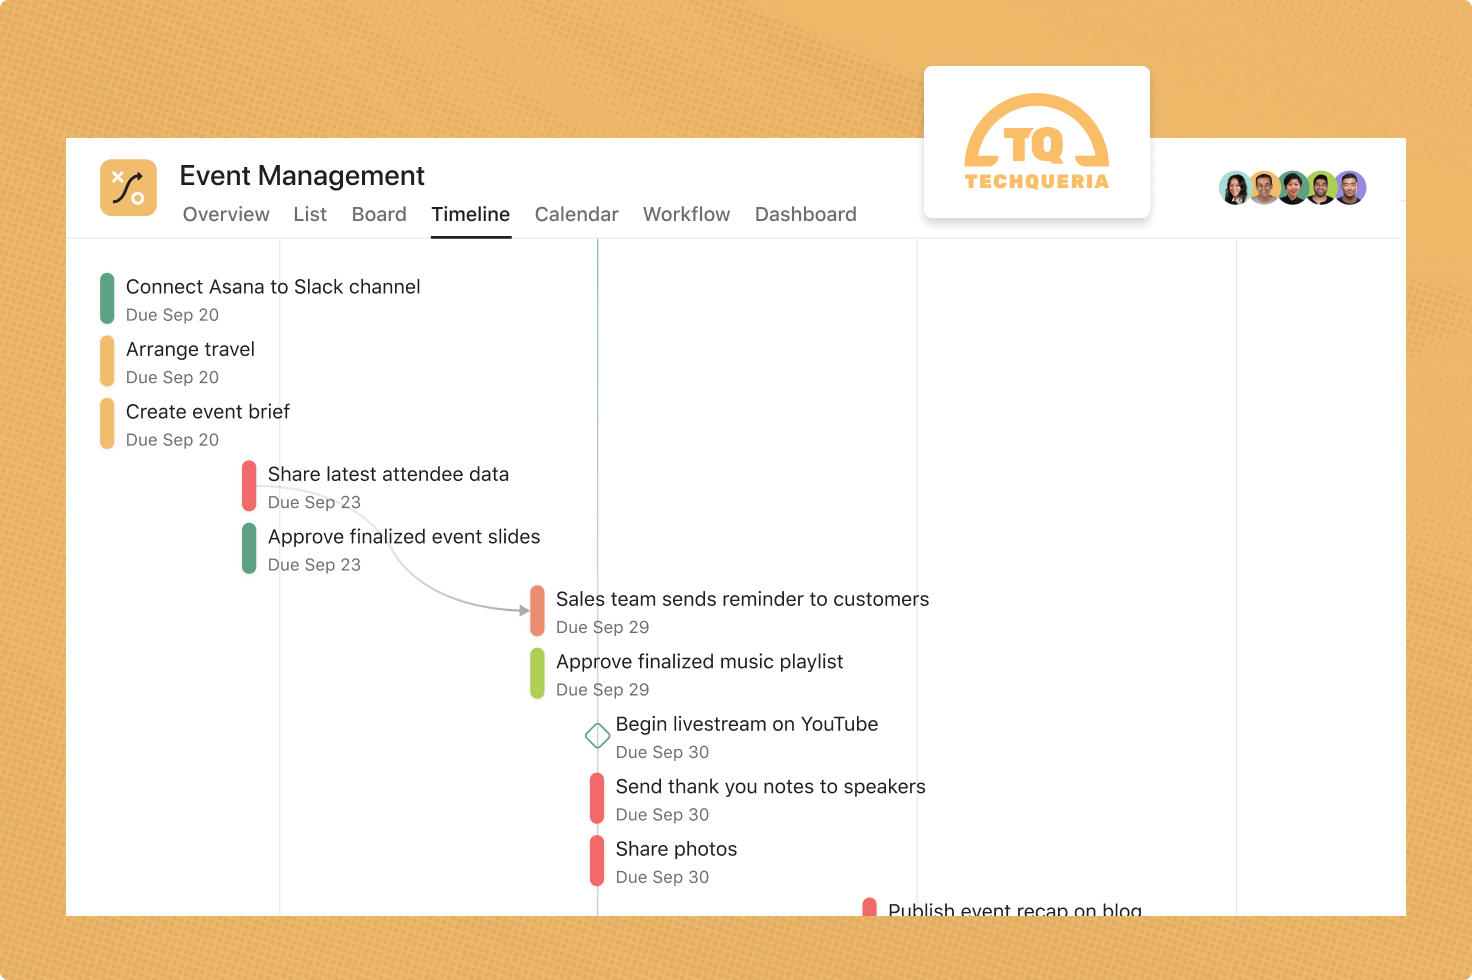 Techqueria uses Asana for their event management workflow